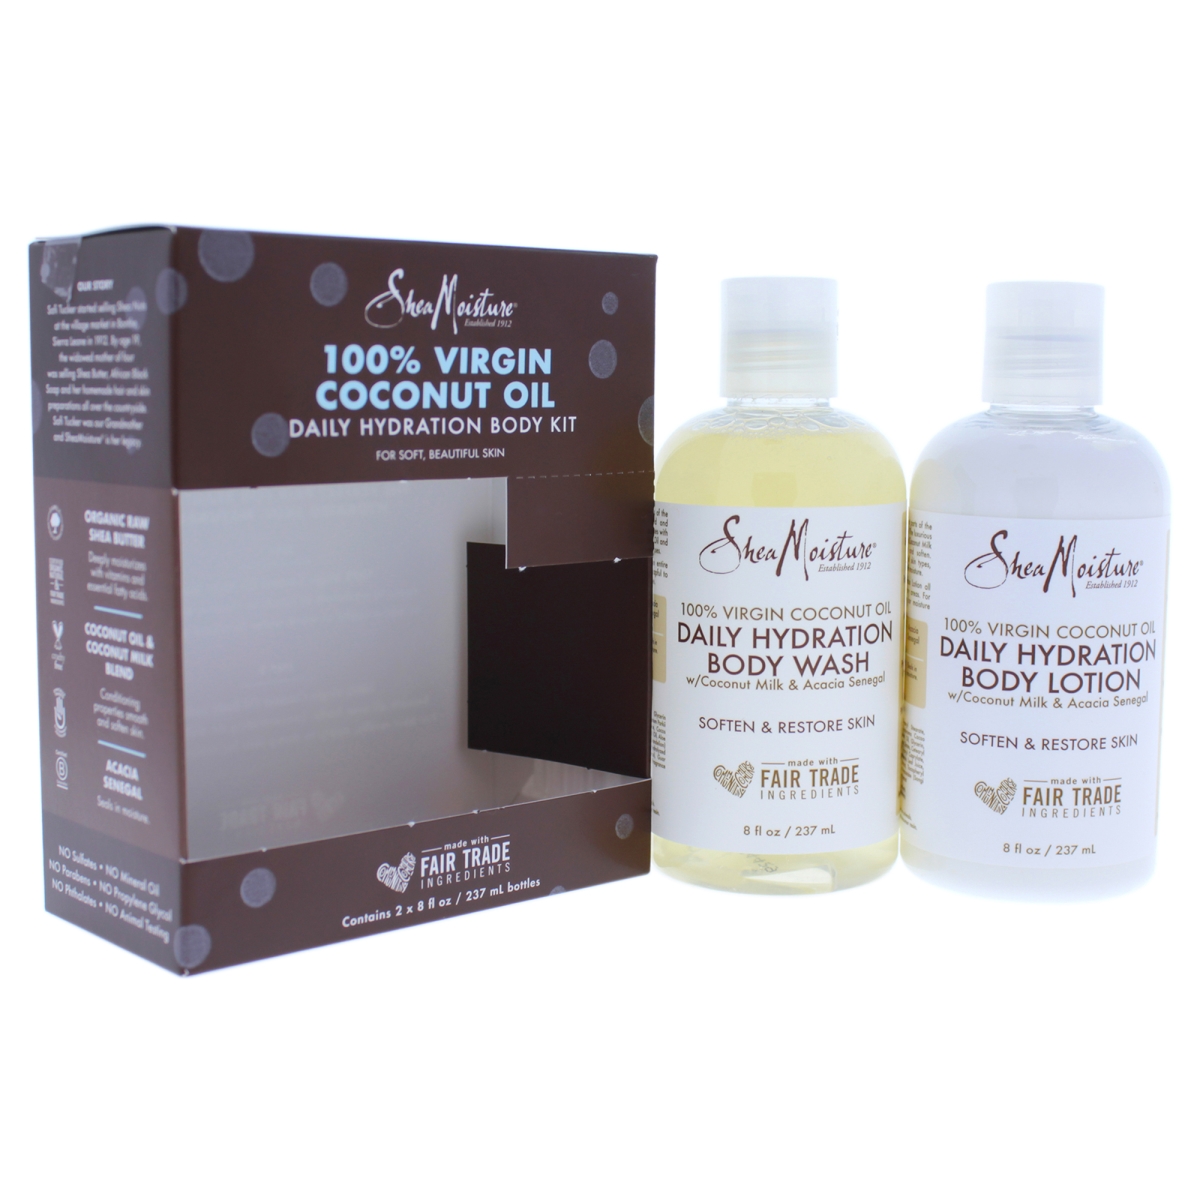 I0084707 100 Percent Virgin Coconut Oil Daily Hydration 8 Oz Body Kit For Unisex - 2 Piece